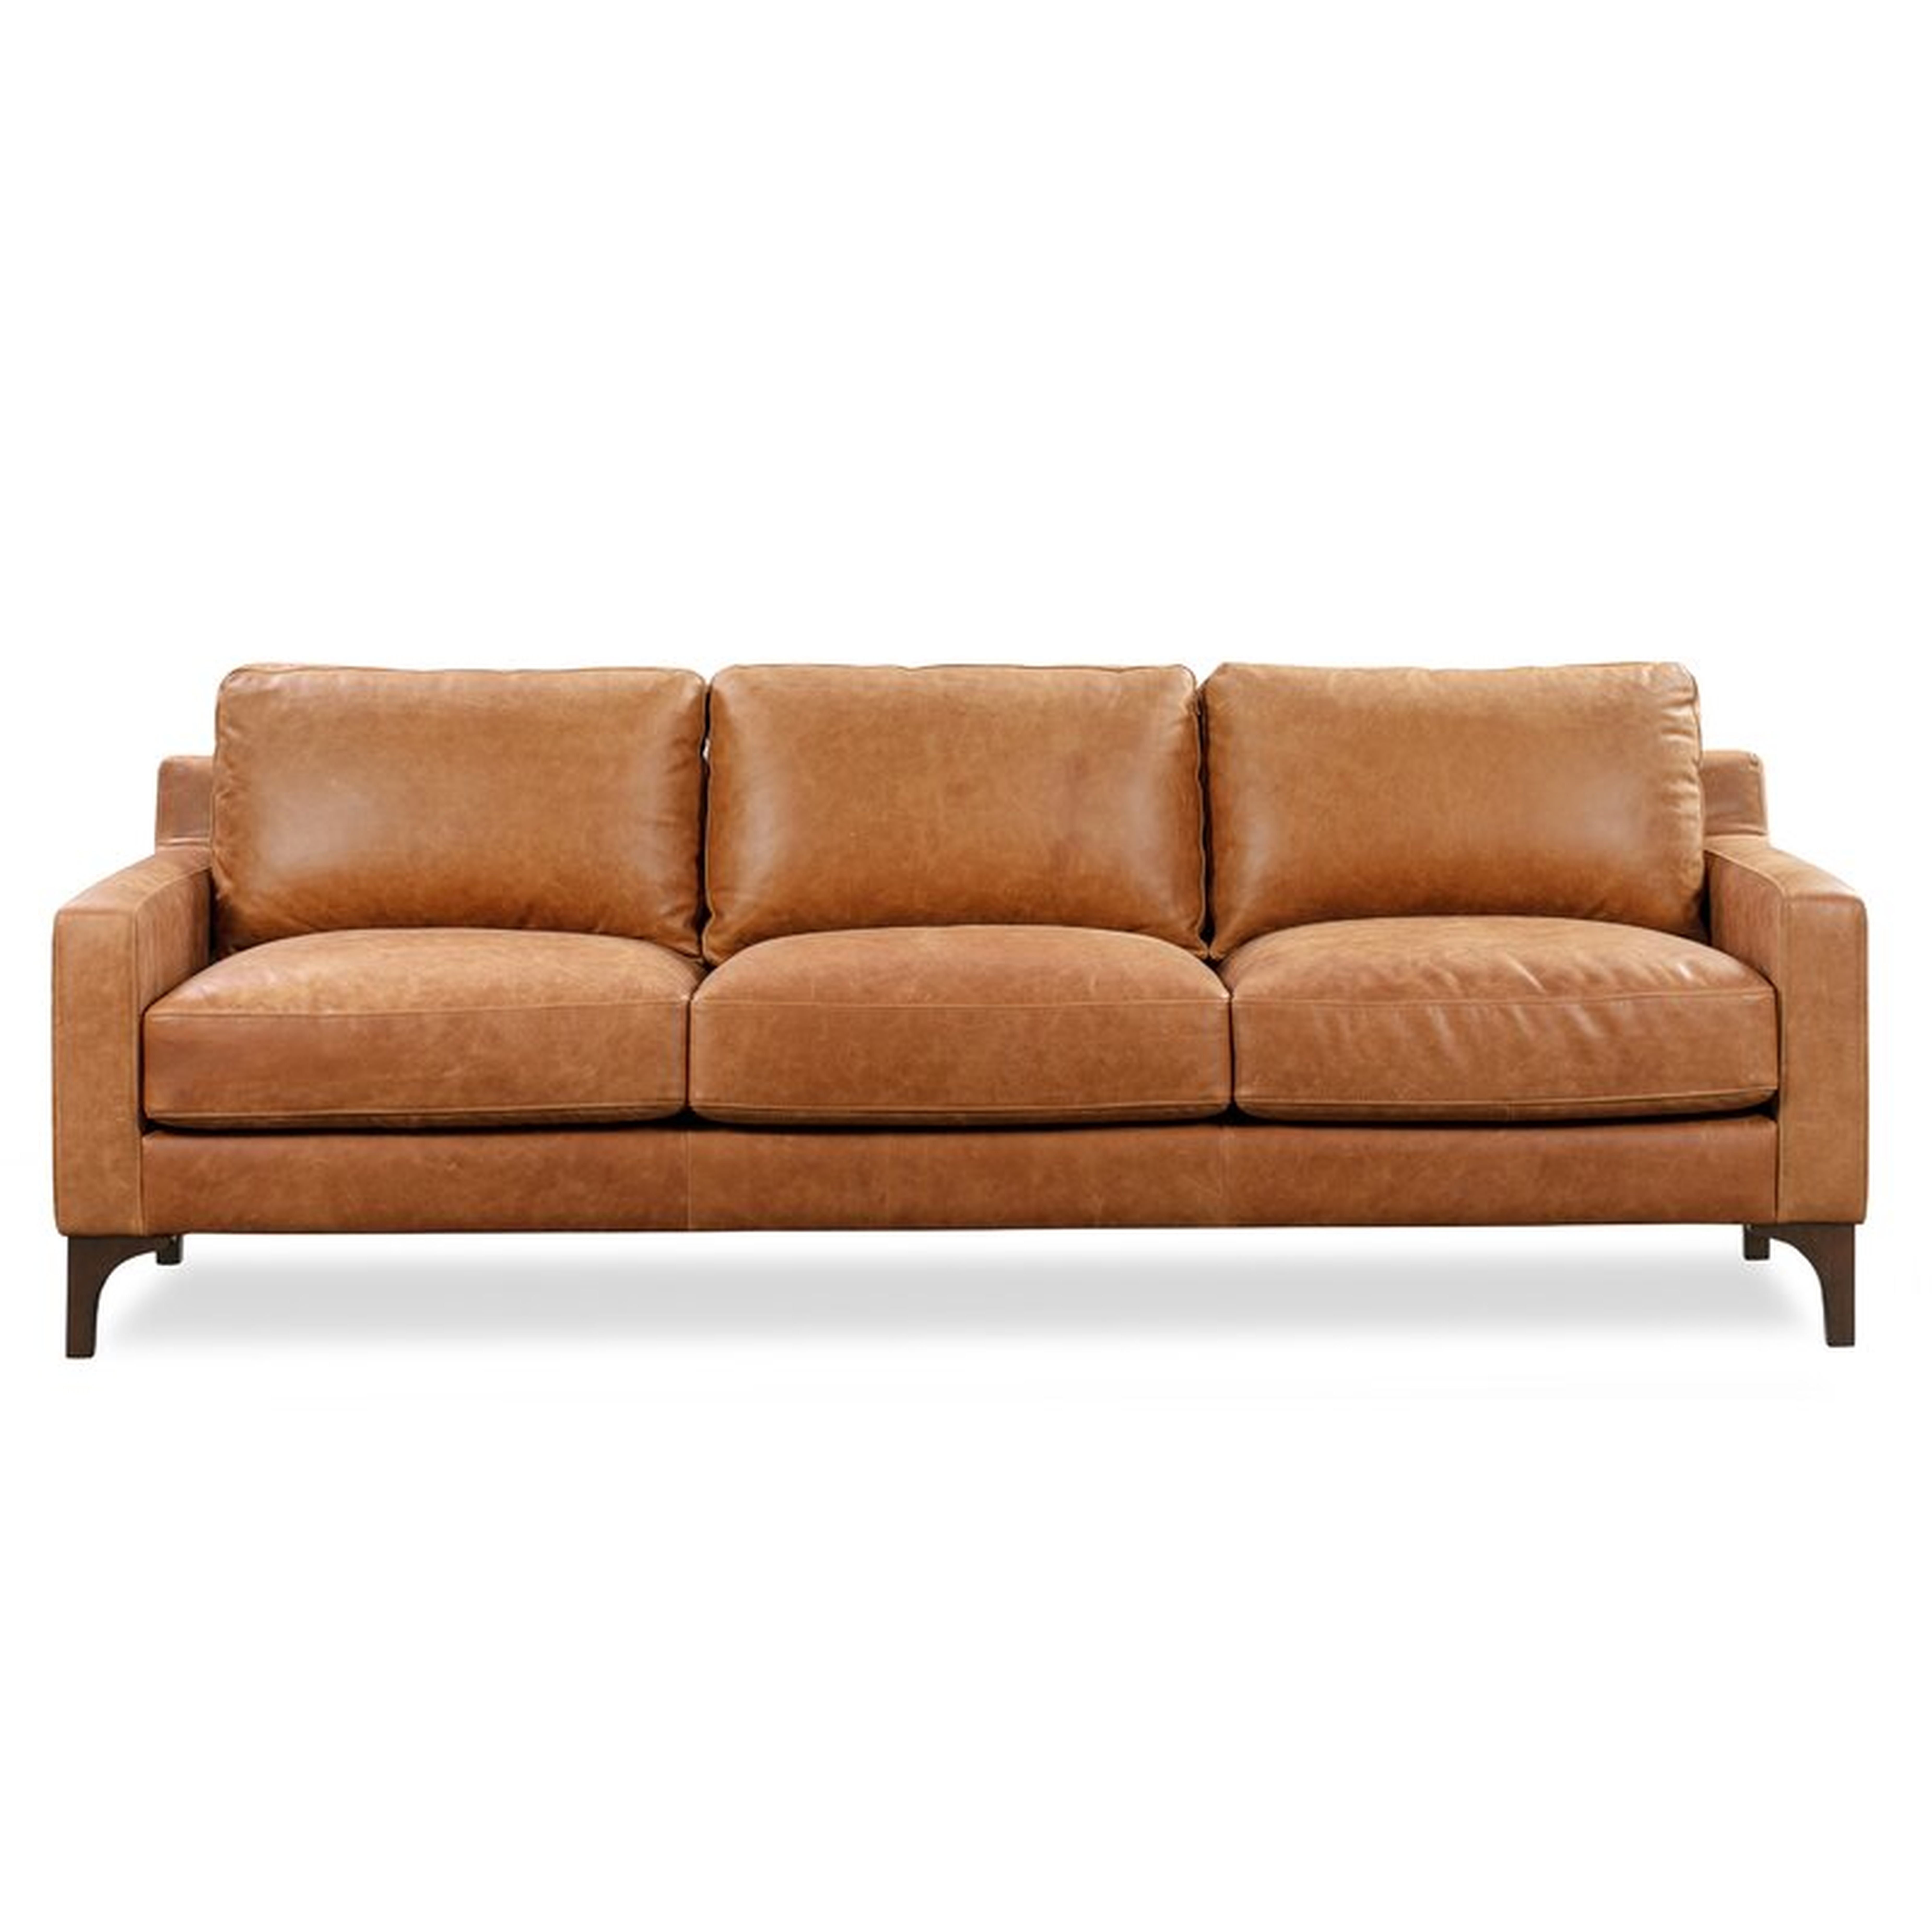 Omro Leather Sofa - Wayfair